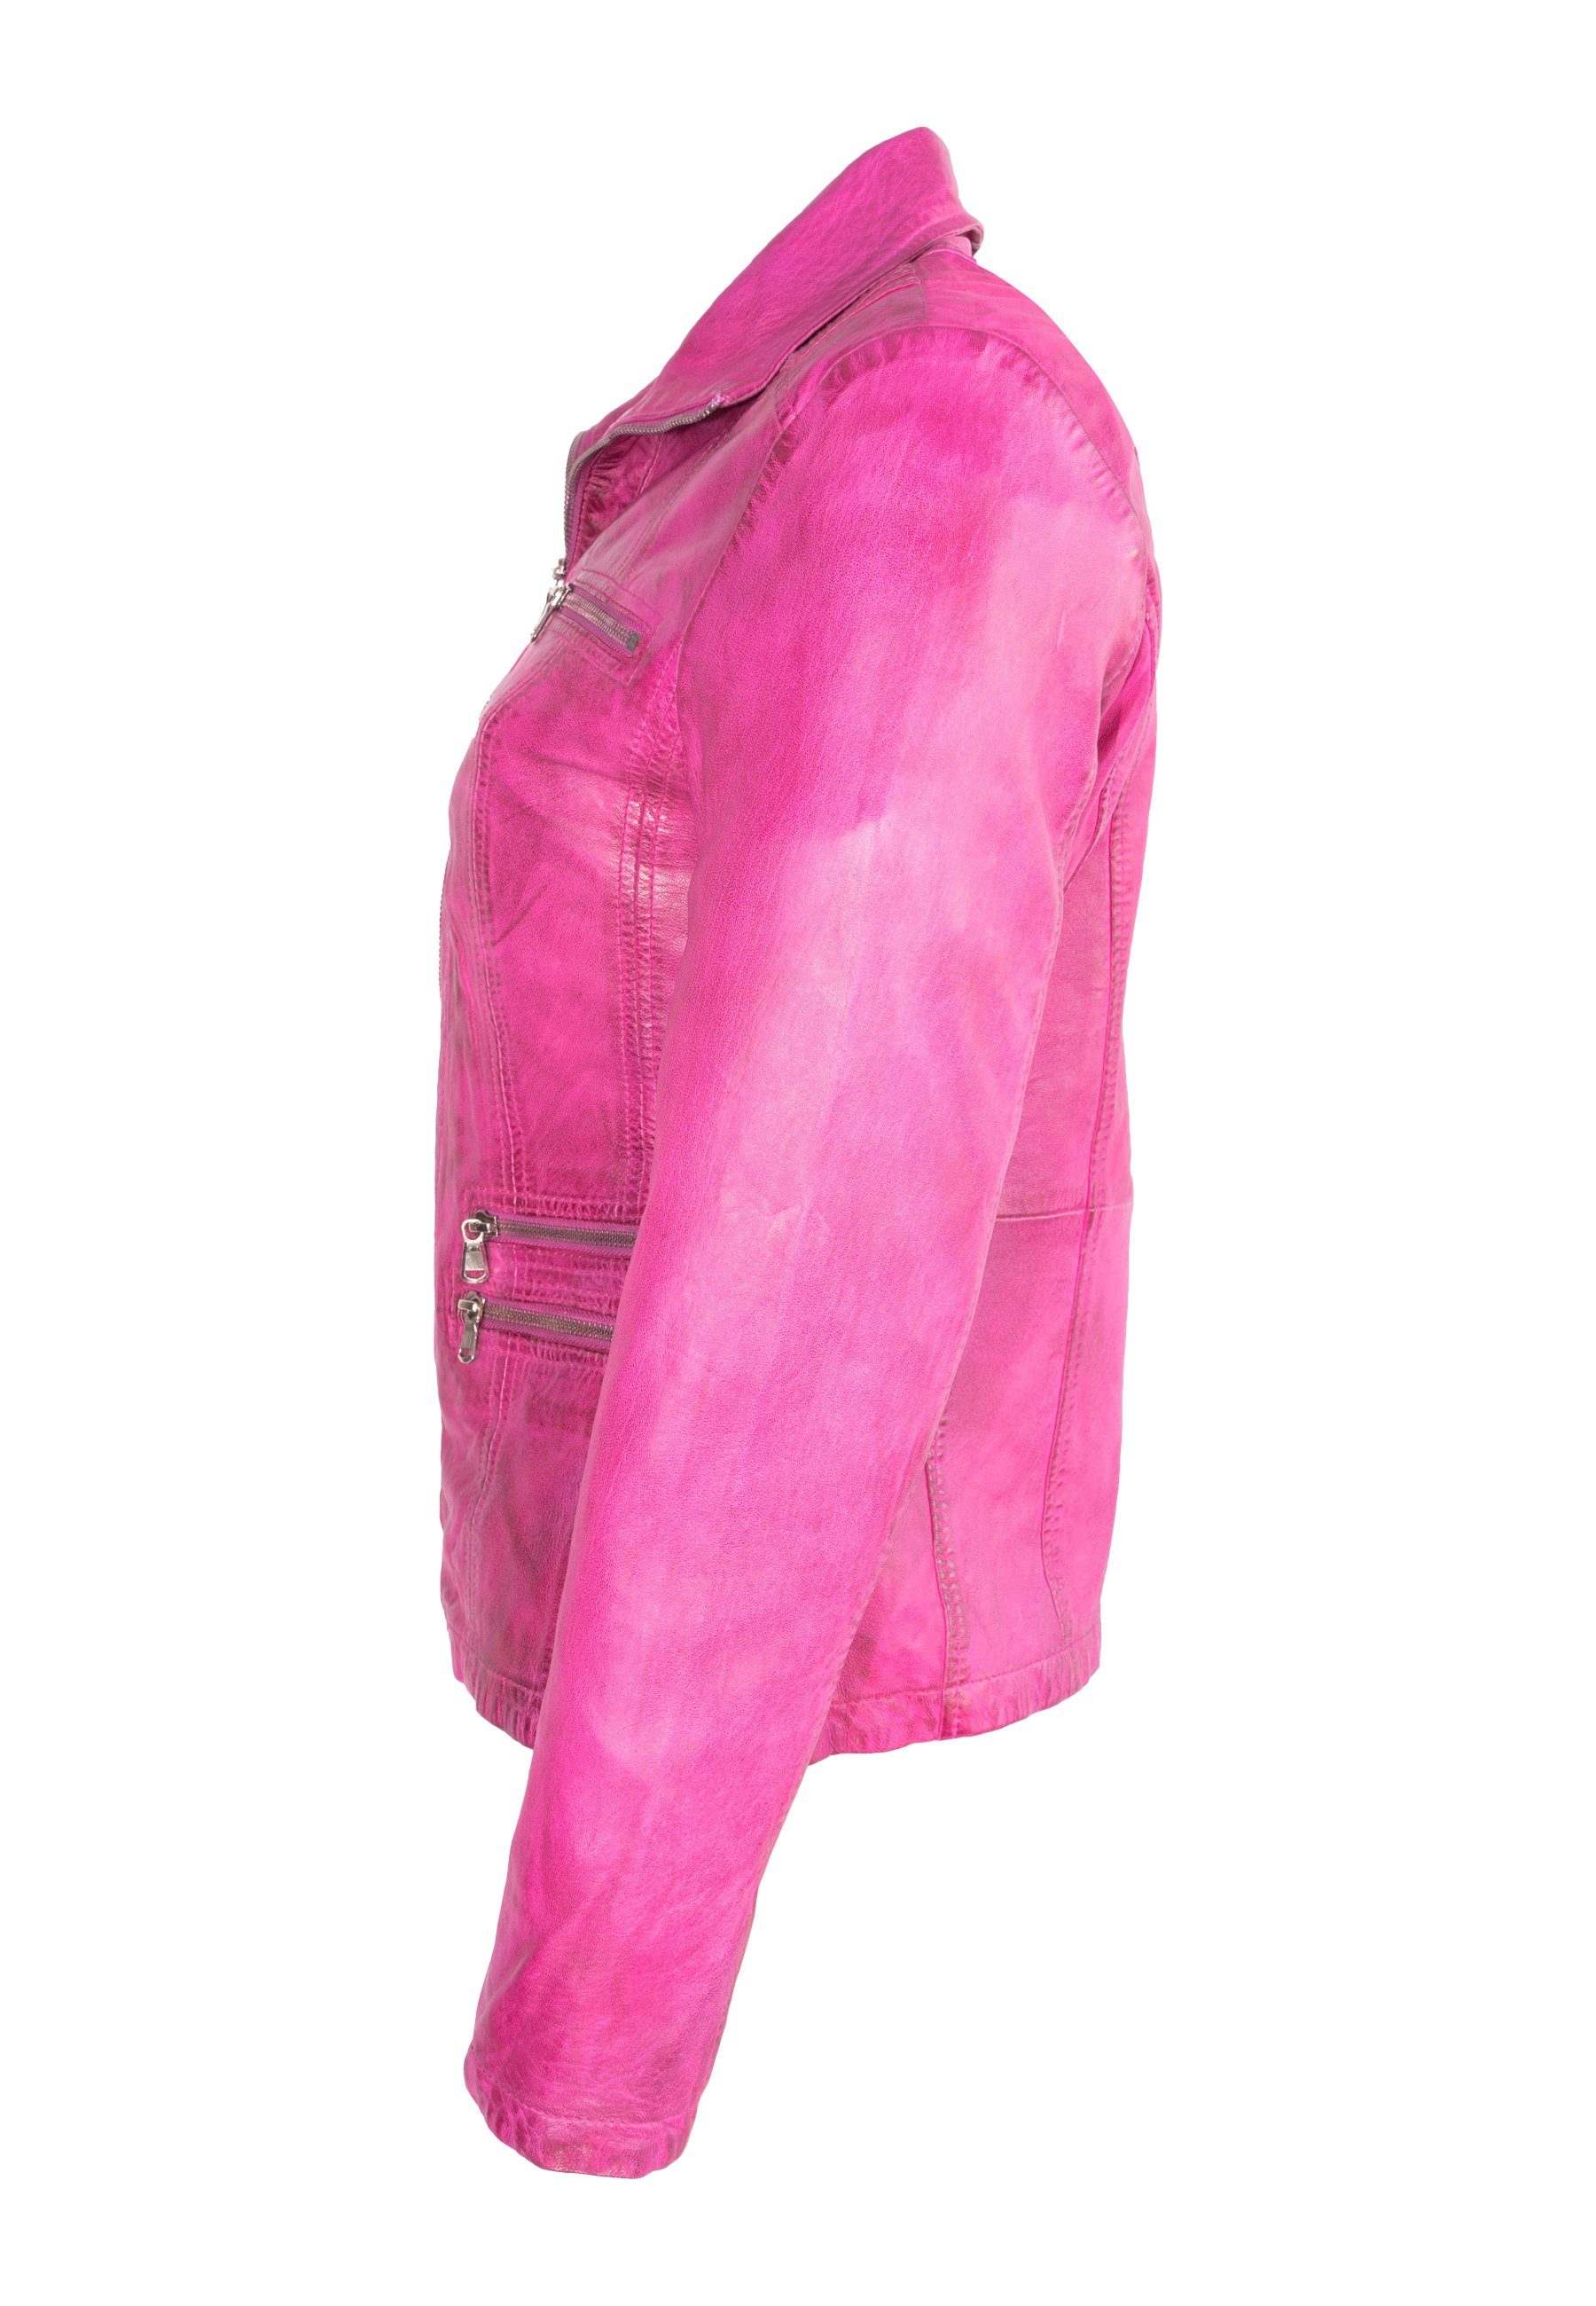 Lolus Lederjacke Clara shocking pink Leder aus Klassisch elegante Damen Lederjacke Lammnappa weichem